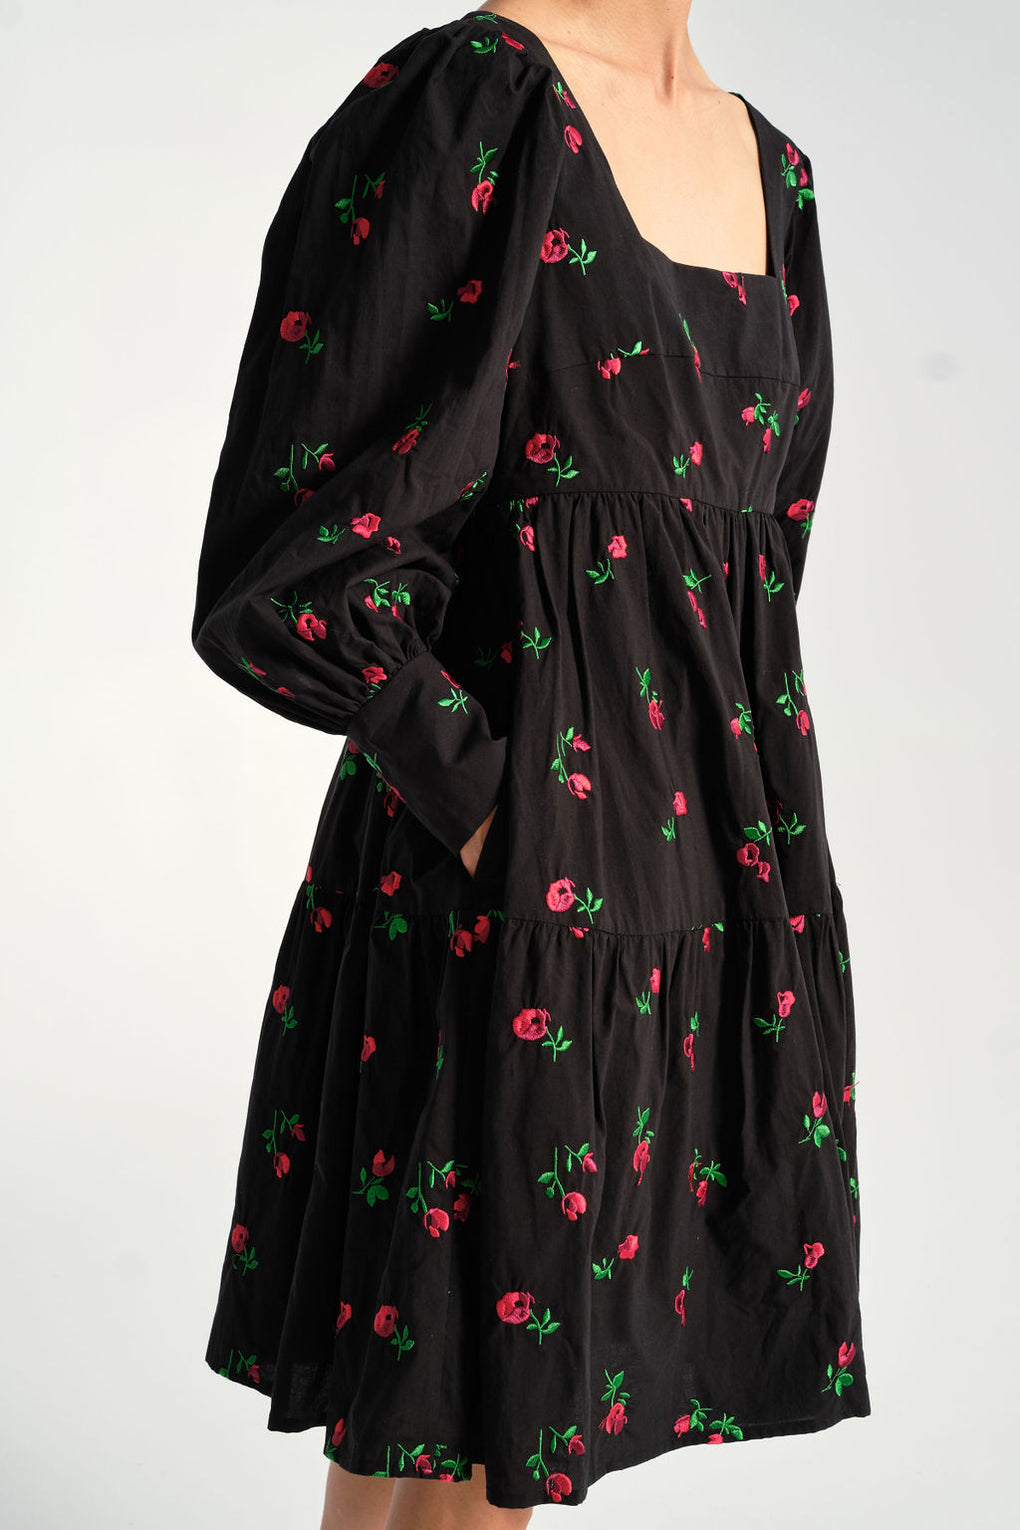 Rachel Antonoff - Christa Empire Dress in Black Rose - Idun - St. Paul